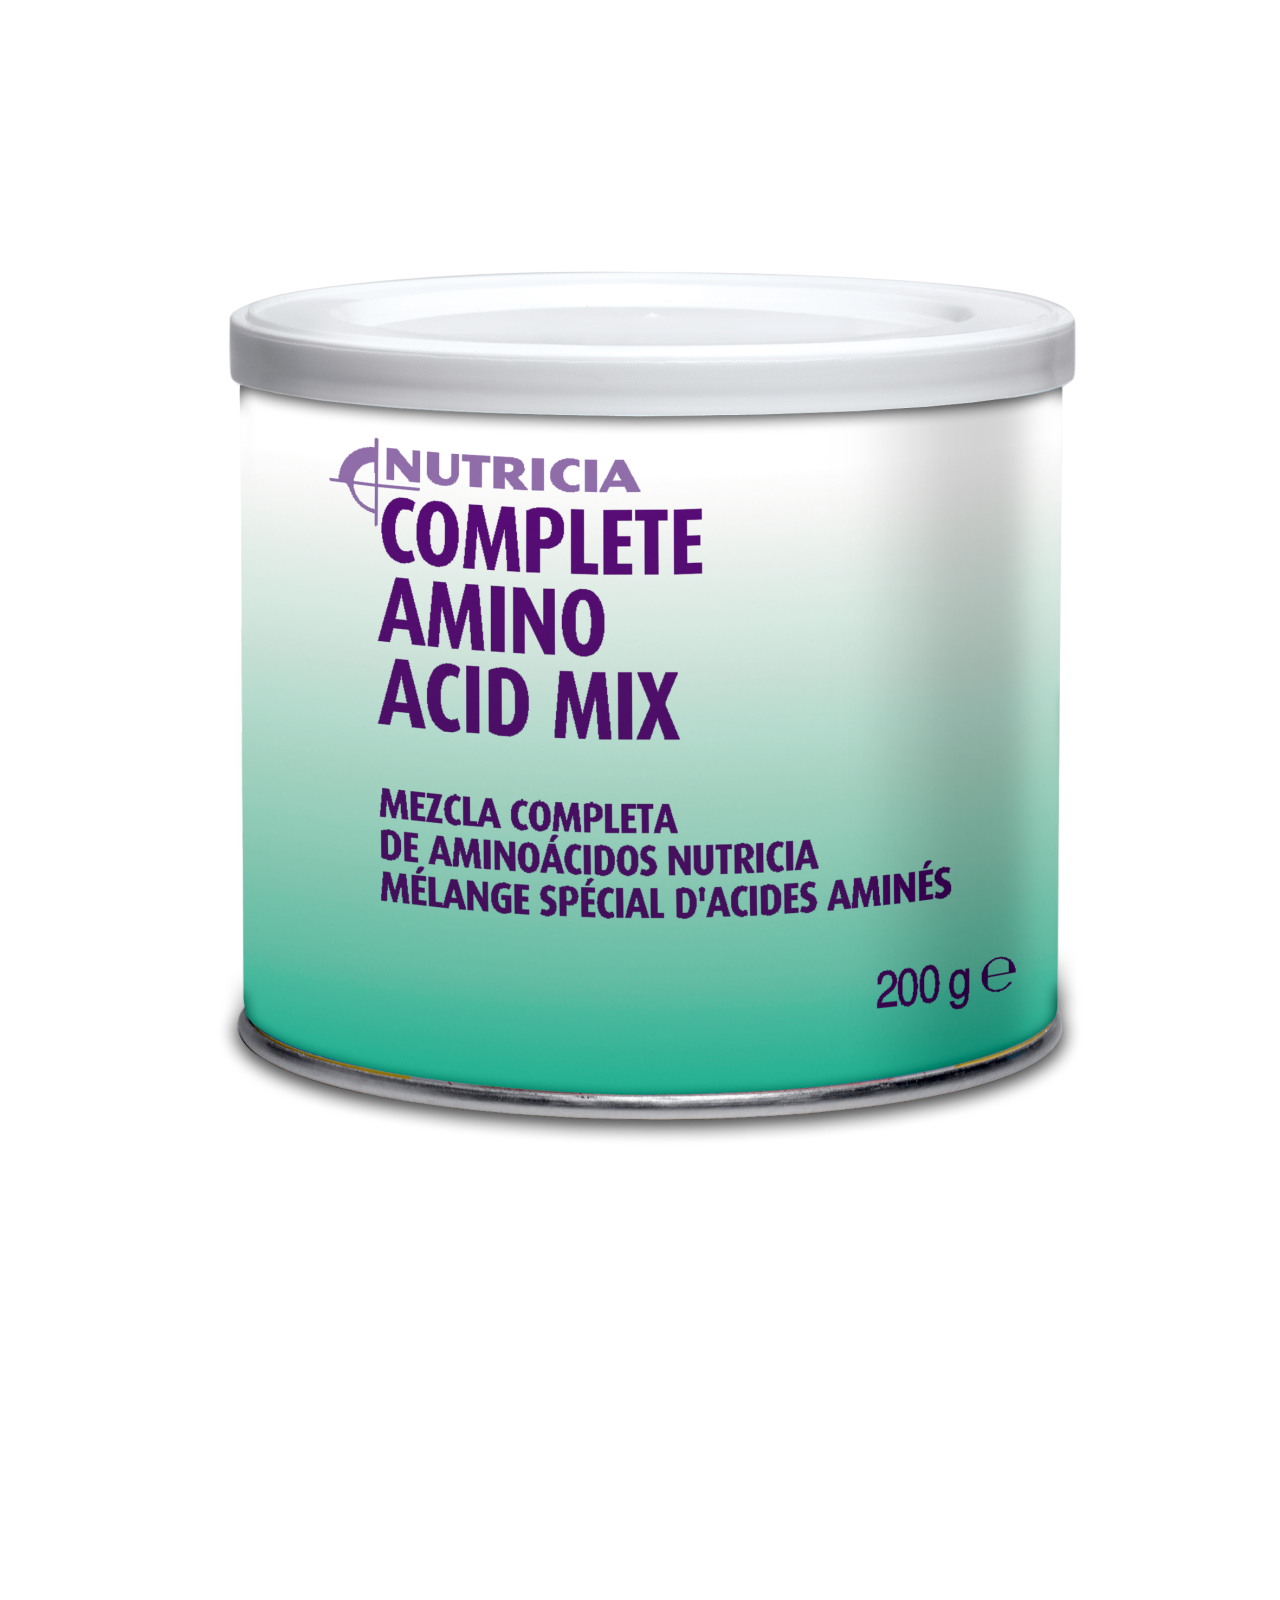 Complete Amino Acid Mix packshot